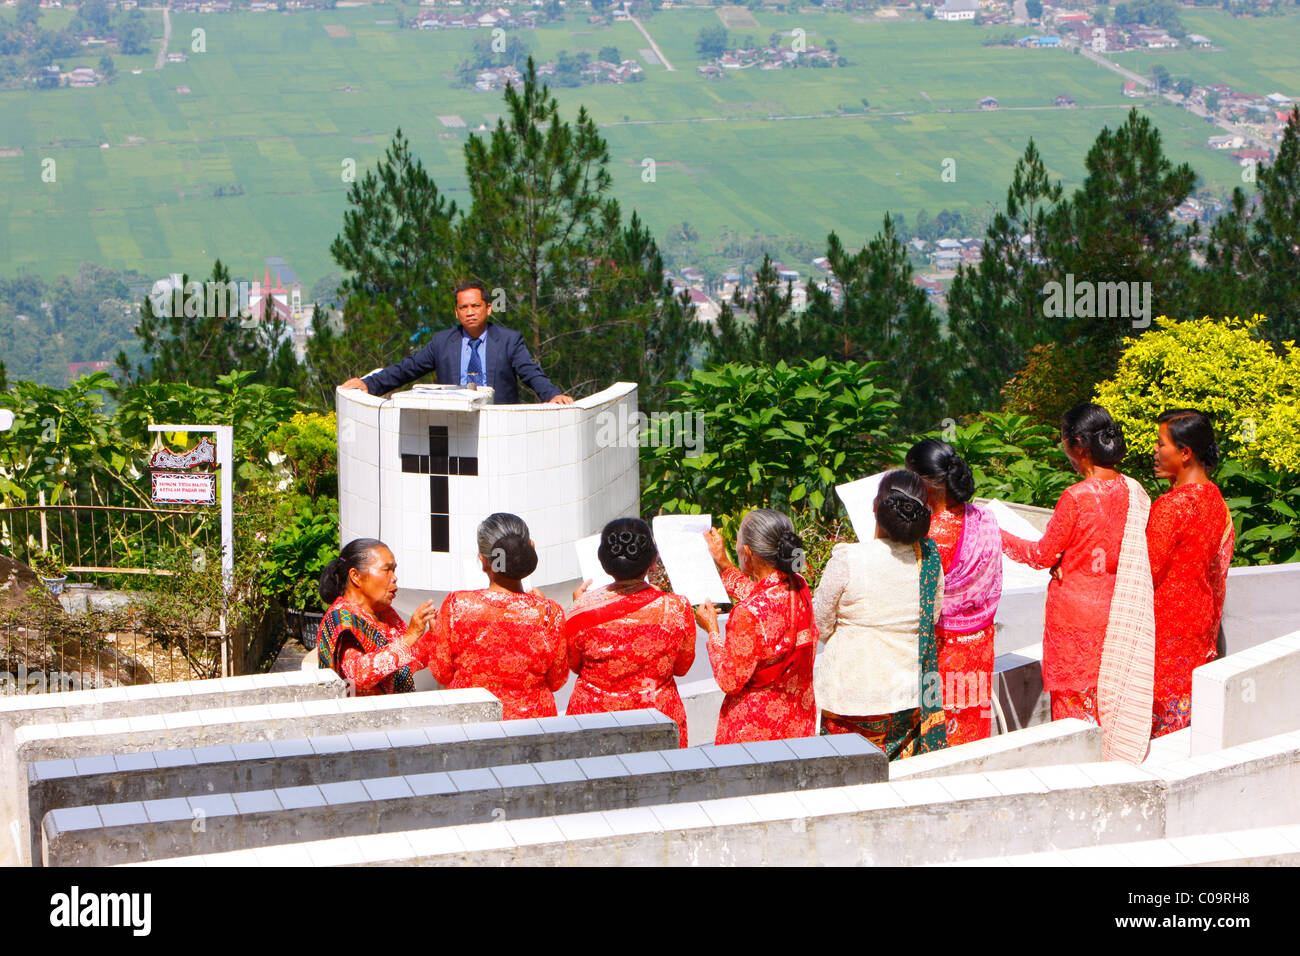 Devotional service on Salib Kasih mountain, Dr. Ludwig Ingwer Nommensen Memorial, Tarutung, Batak region, Sumatra, Indonesia Stock Photo